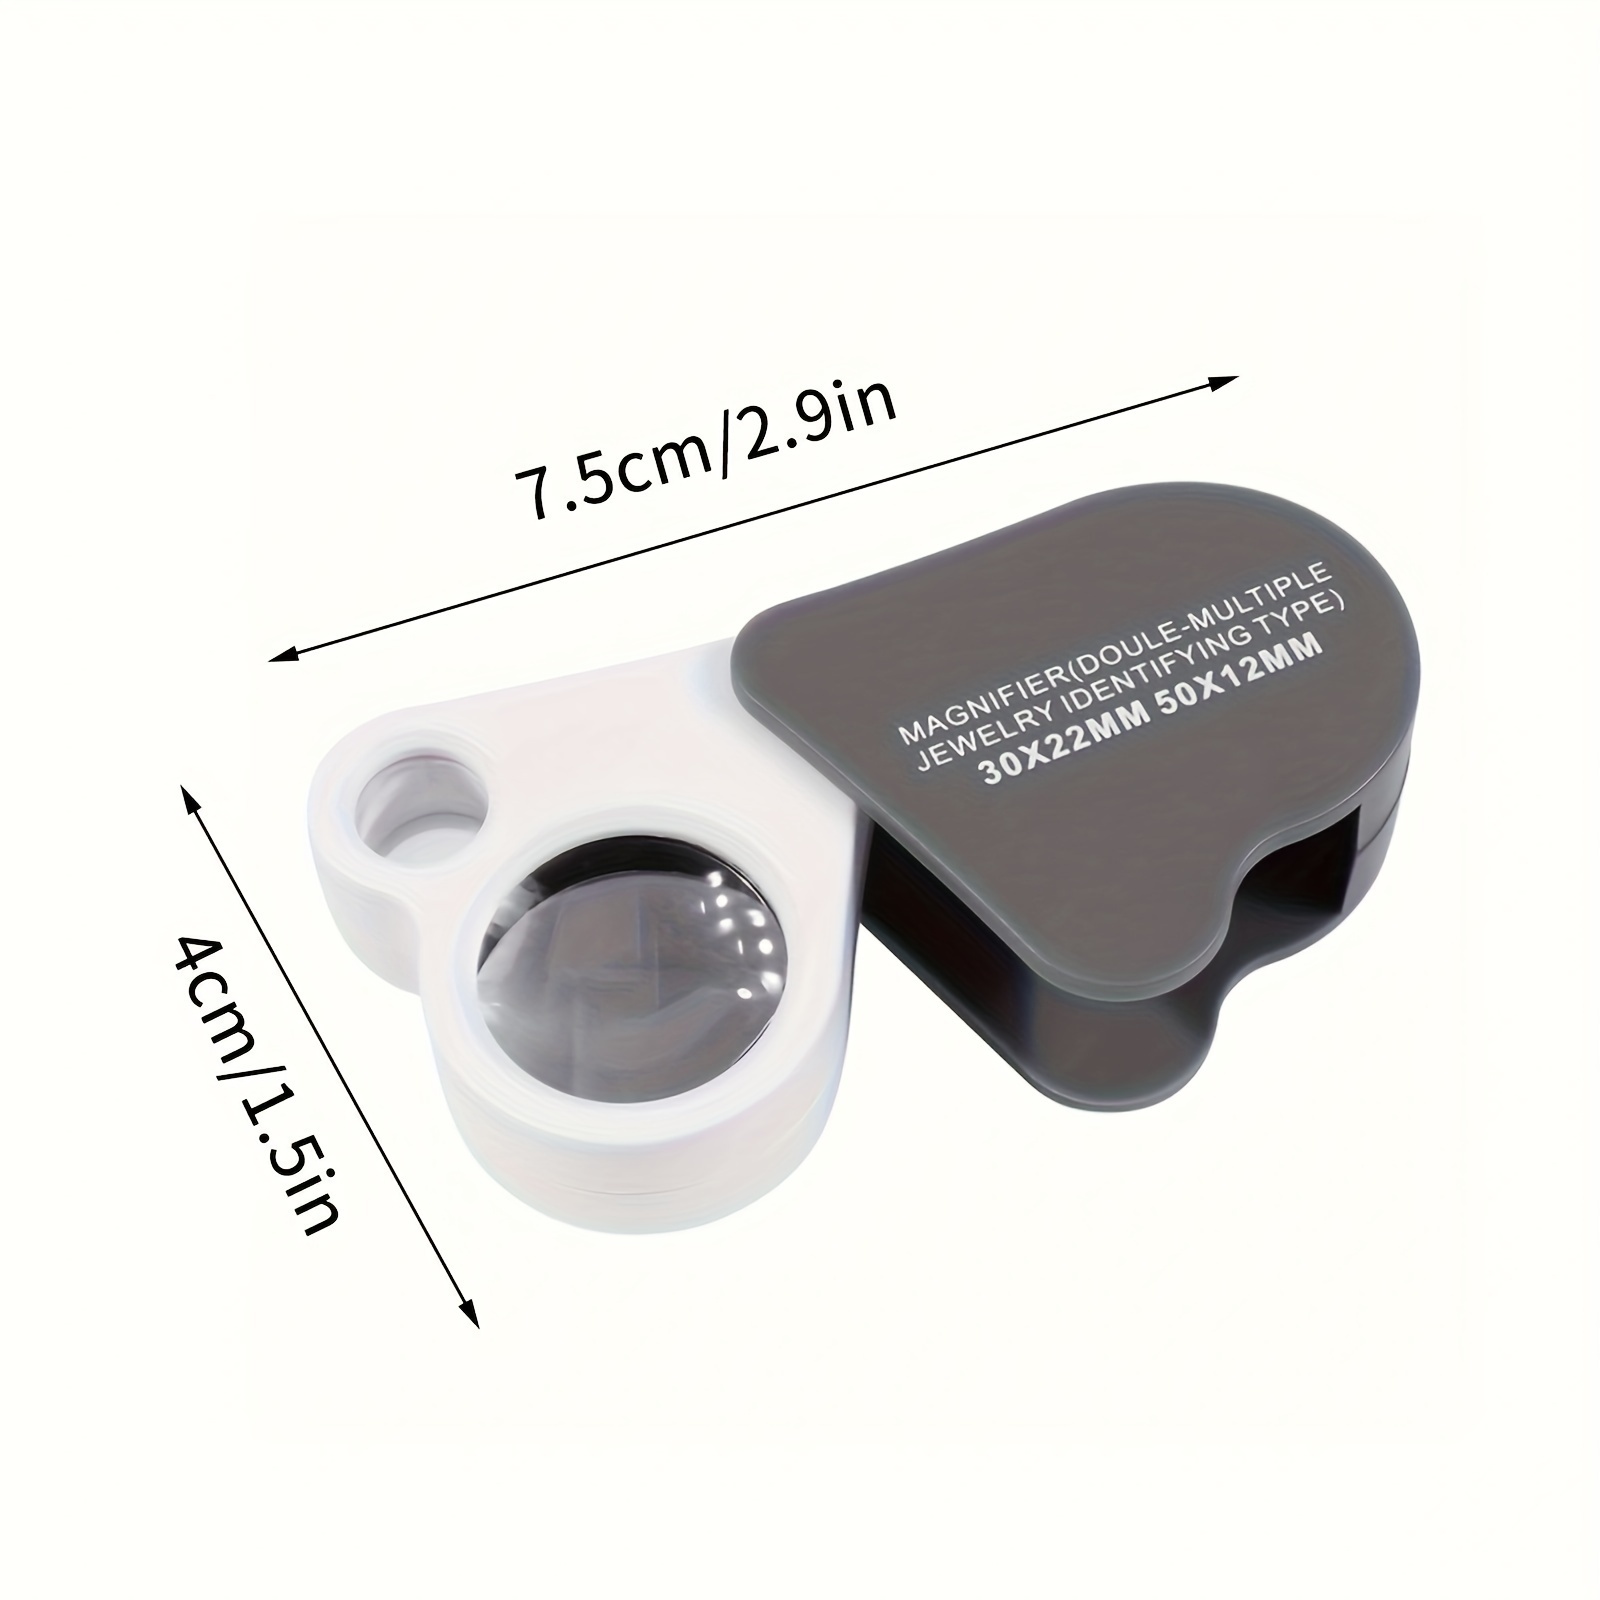 30X Magnifying Loupe Jewelry Eye Glass Magnifier Diamond Jewelers